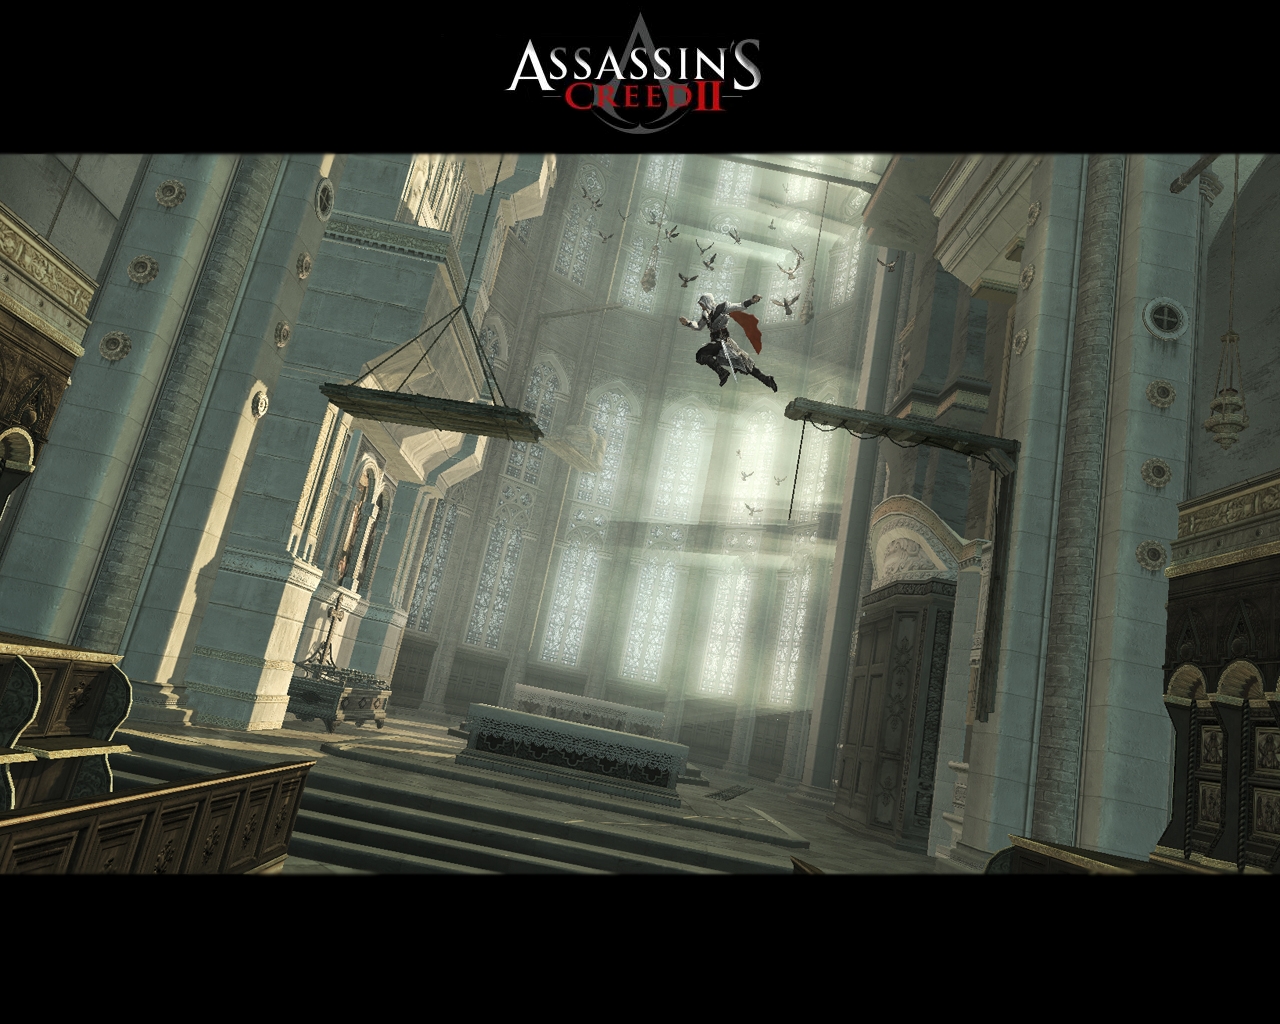 Assassin games 2. Ассасин Крид 2. Assassins Creed 2 склеп Аудиторе. Assassins Creed 2 screenshots. Assassin’s Creed (игра) 2007.